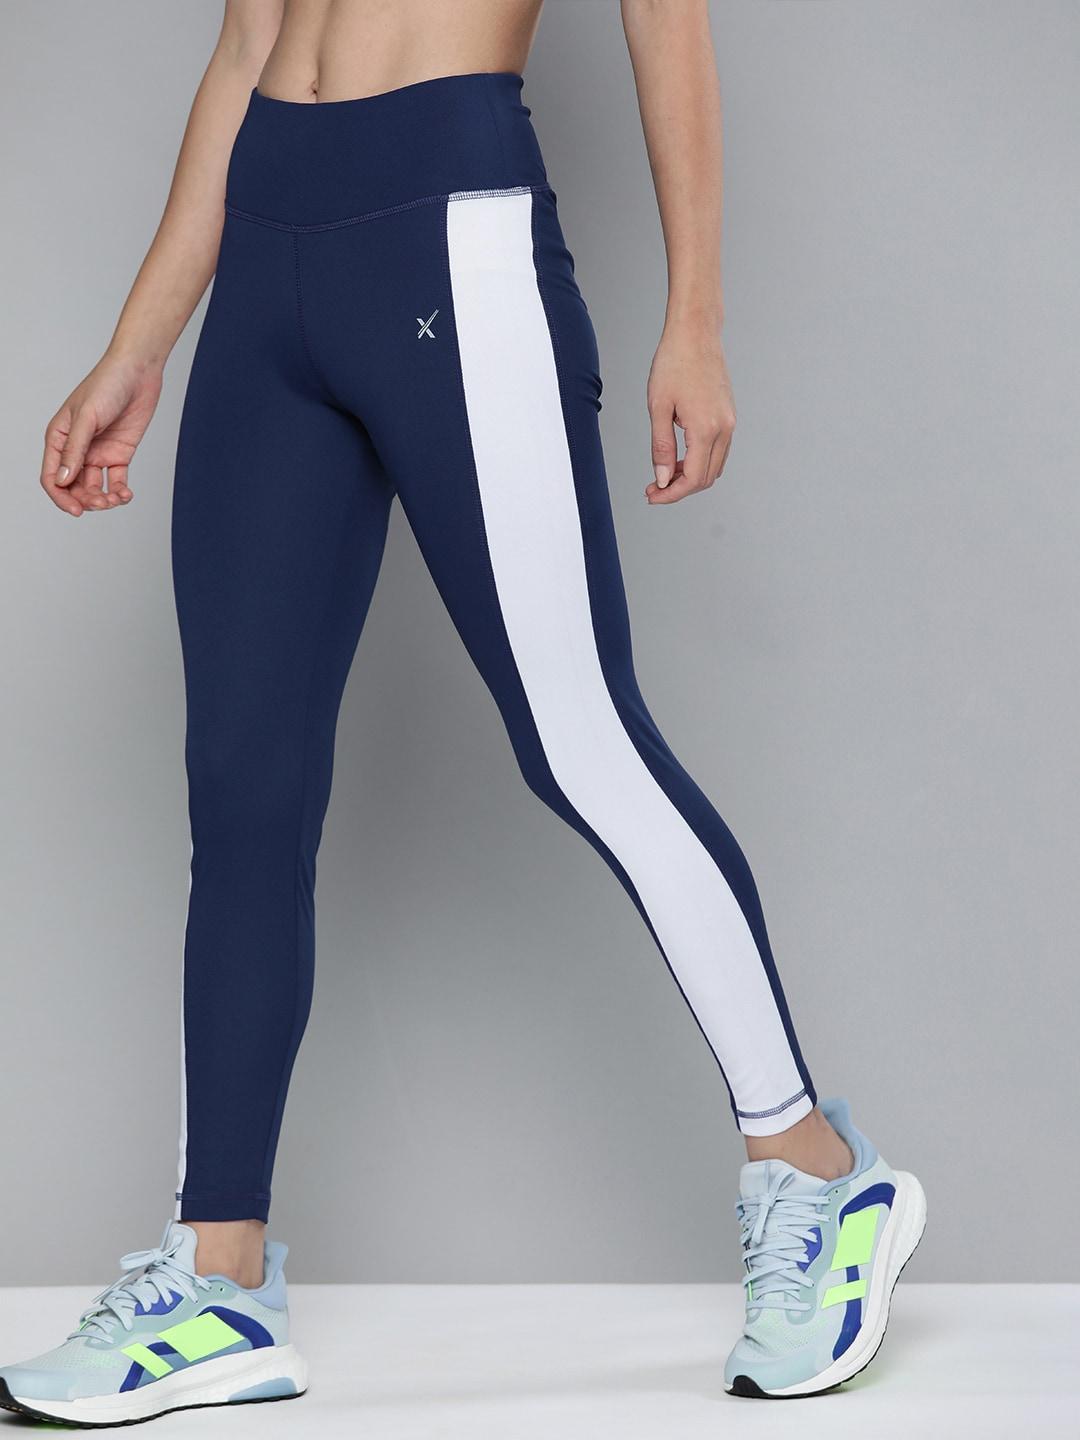 hrx by hrithik roshan women navy blue & white solid running tights